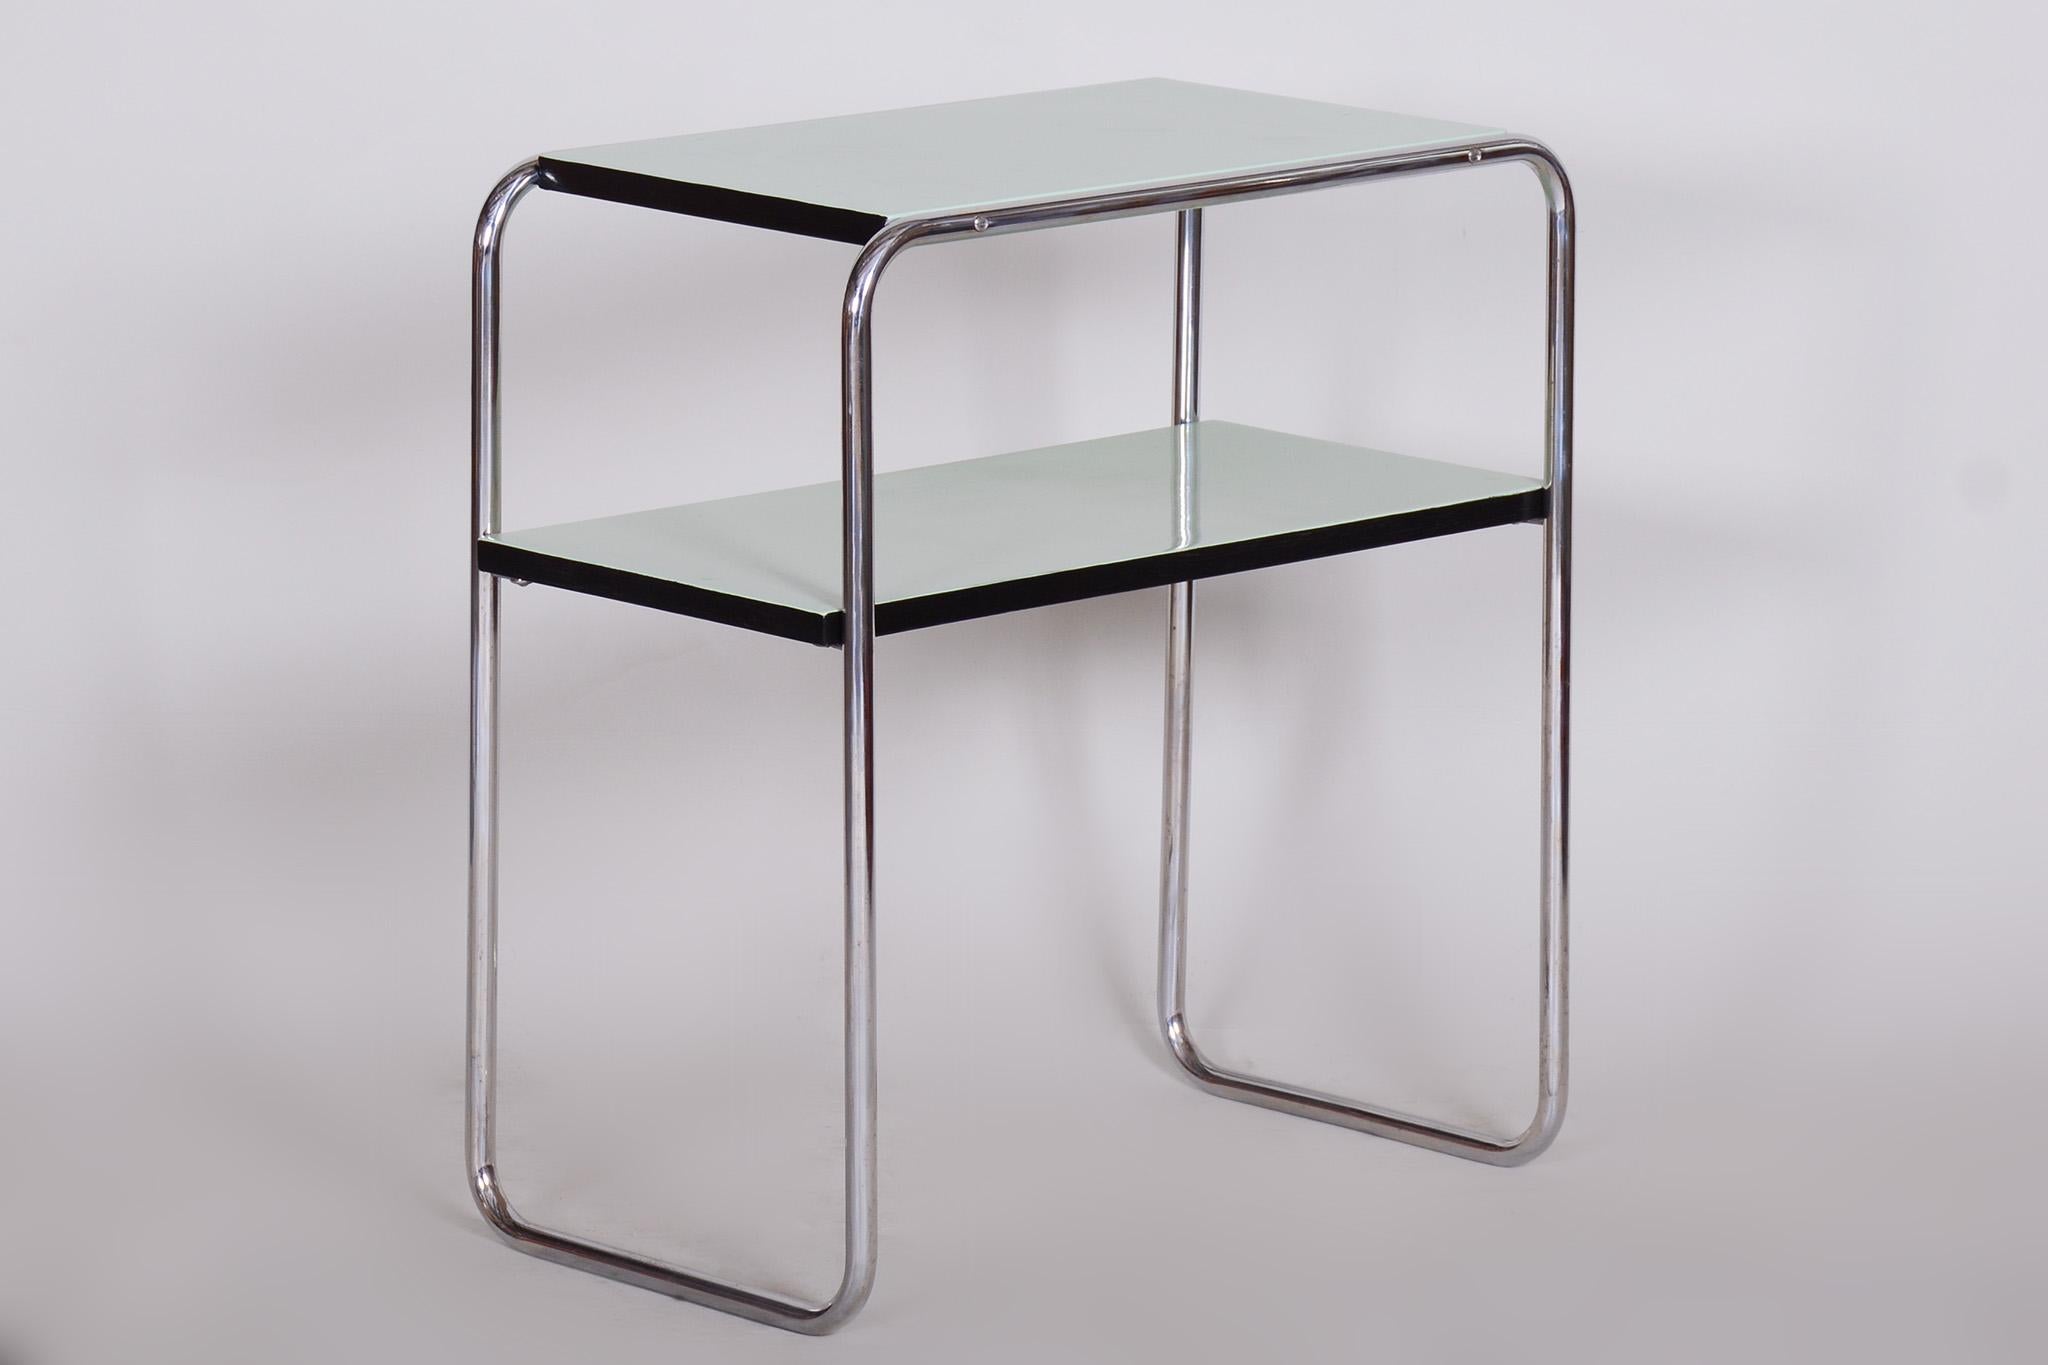 Restored Art Deco Side Table, Marcel Breuer, Thonet Chrome Steel, Germany, 1930s For Sale 2